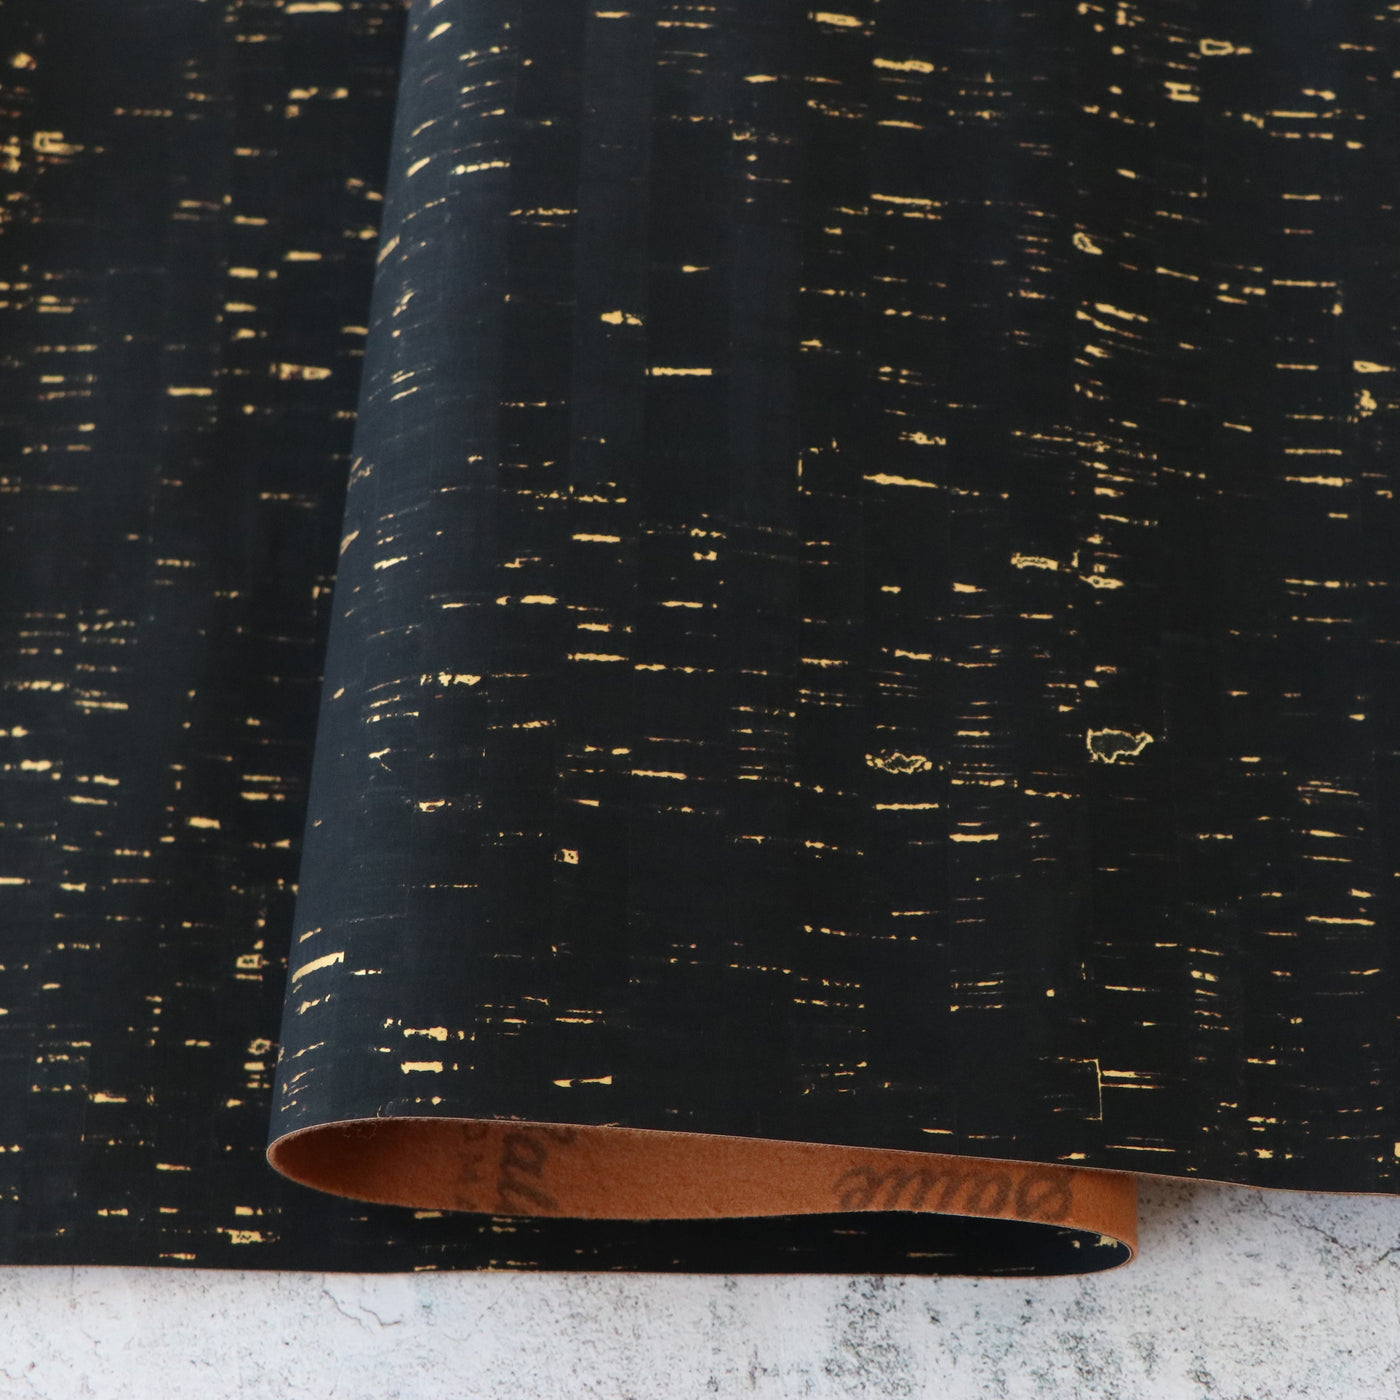 Rustic Natural Black Gold Flecked Cork Fabric